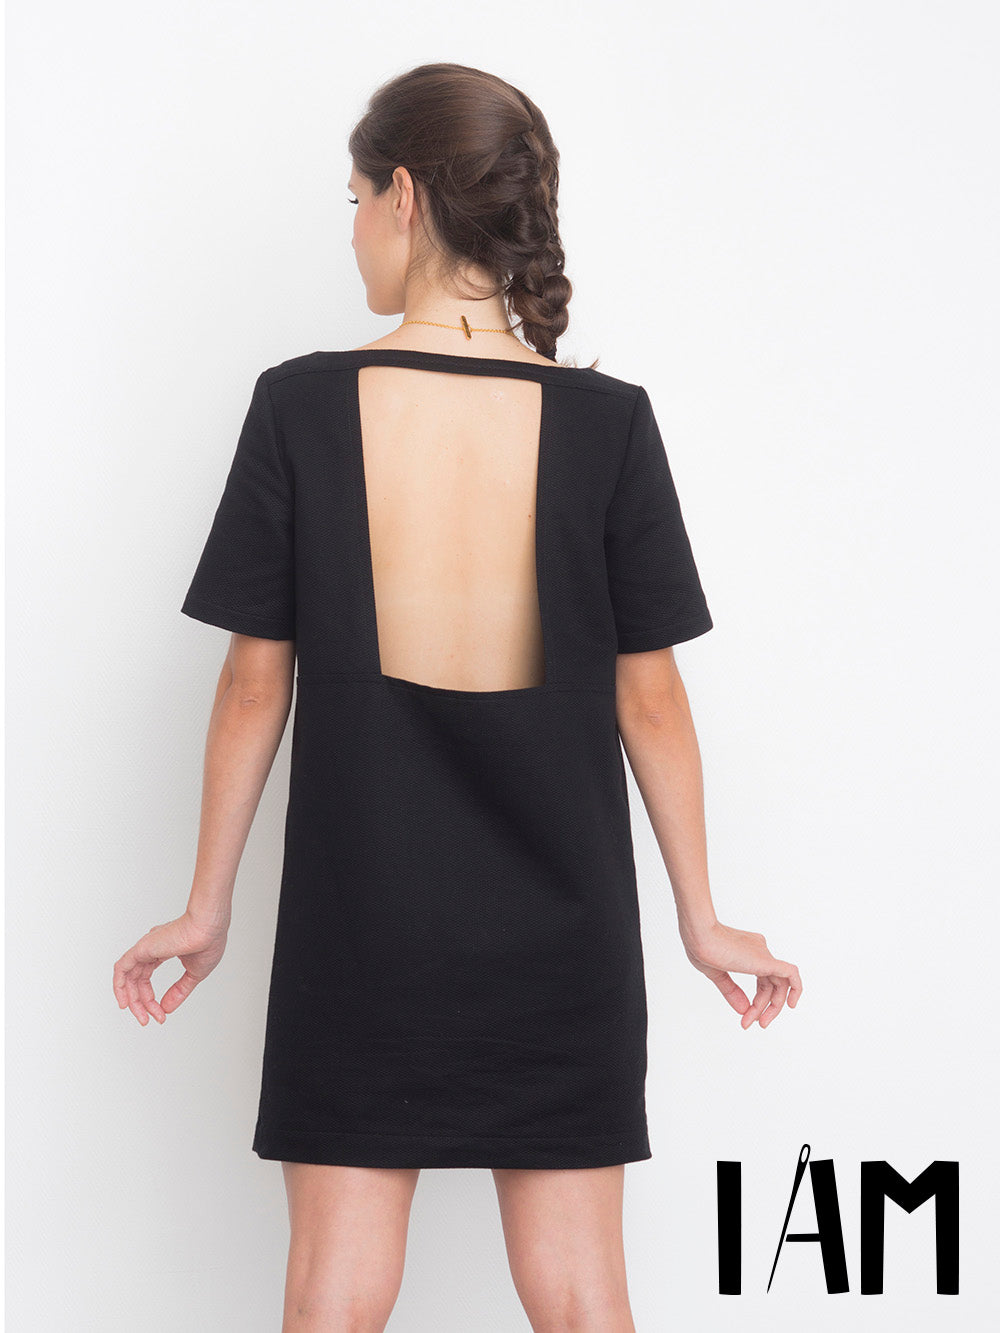 I AM - Aphrodite Backless Dress / Full Back Dress Sewing Pattern